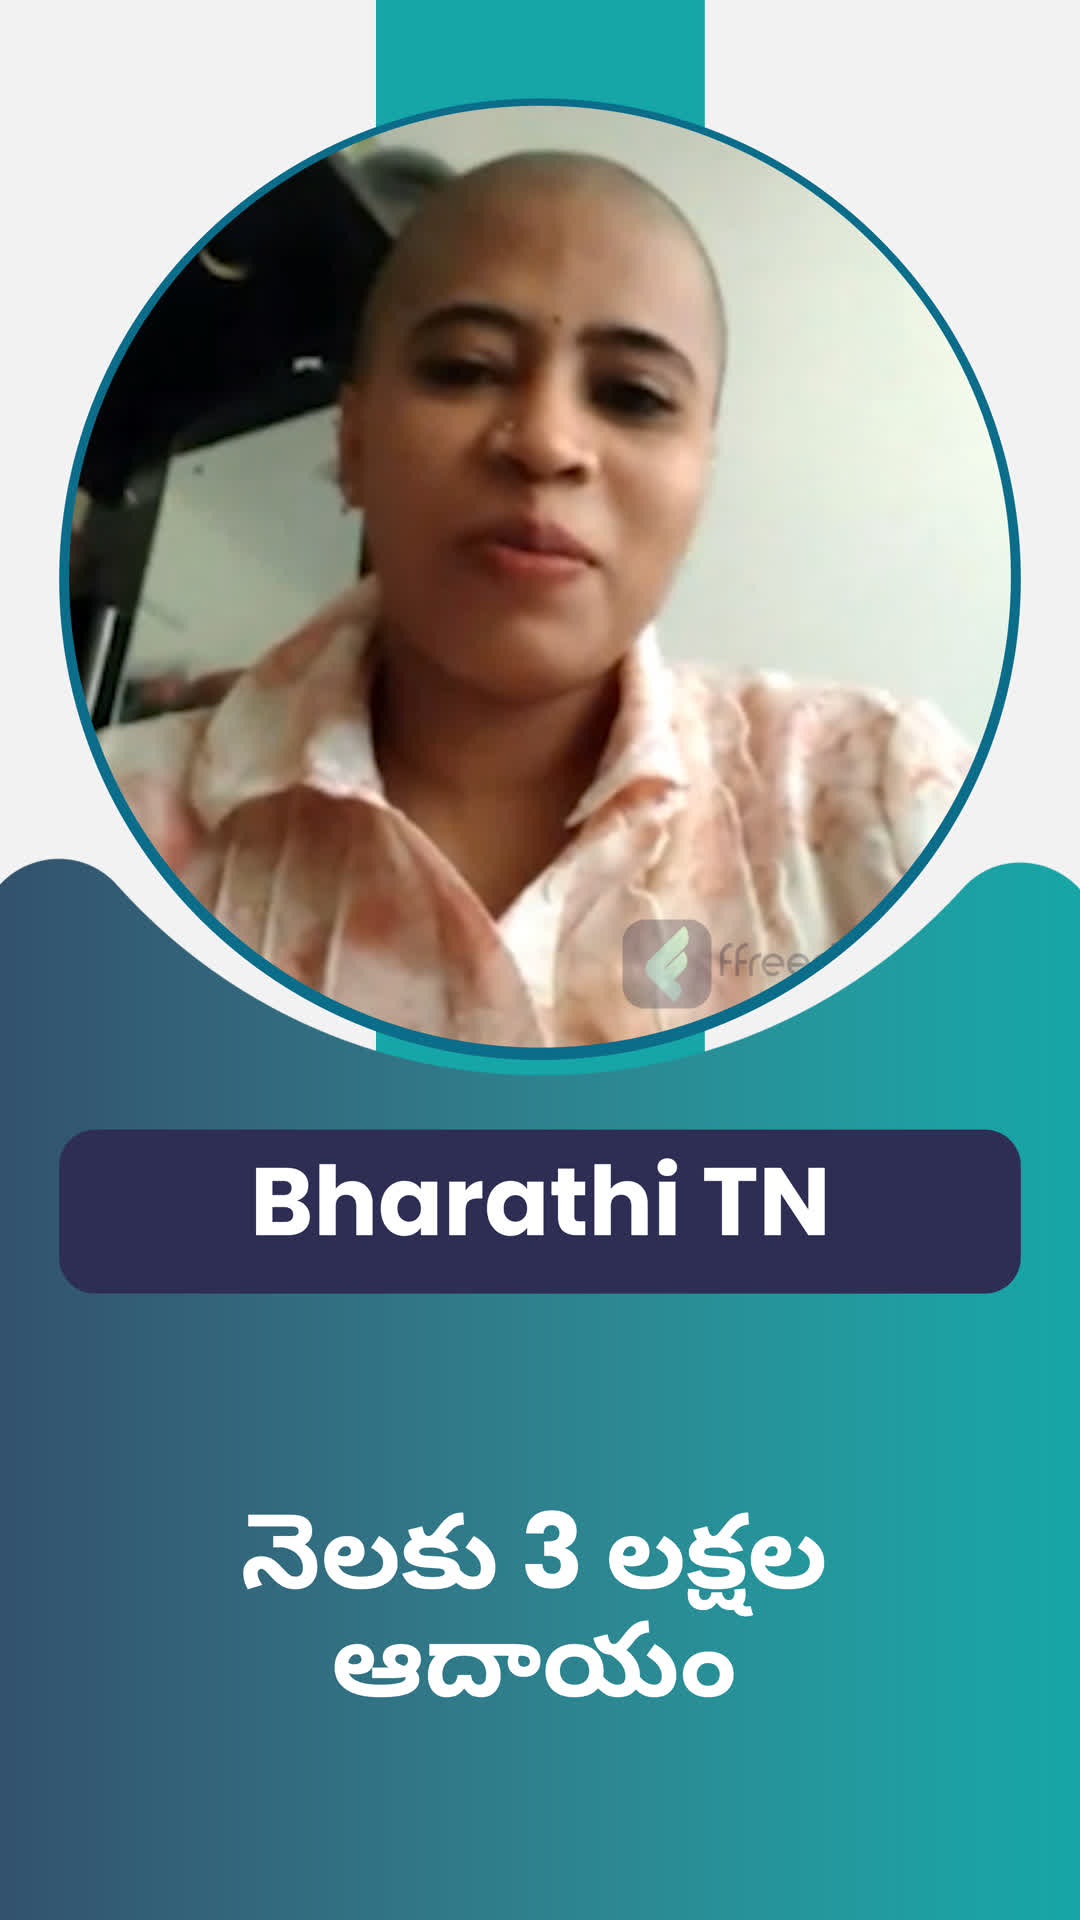 Bharathi TN's Honest Review of ffreedom app - Chikballapur ,Karnataka